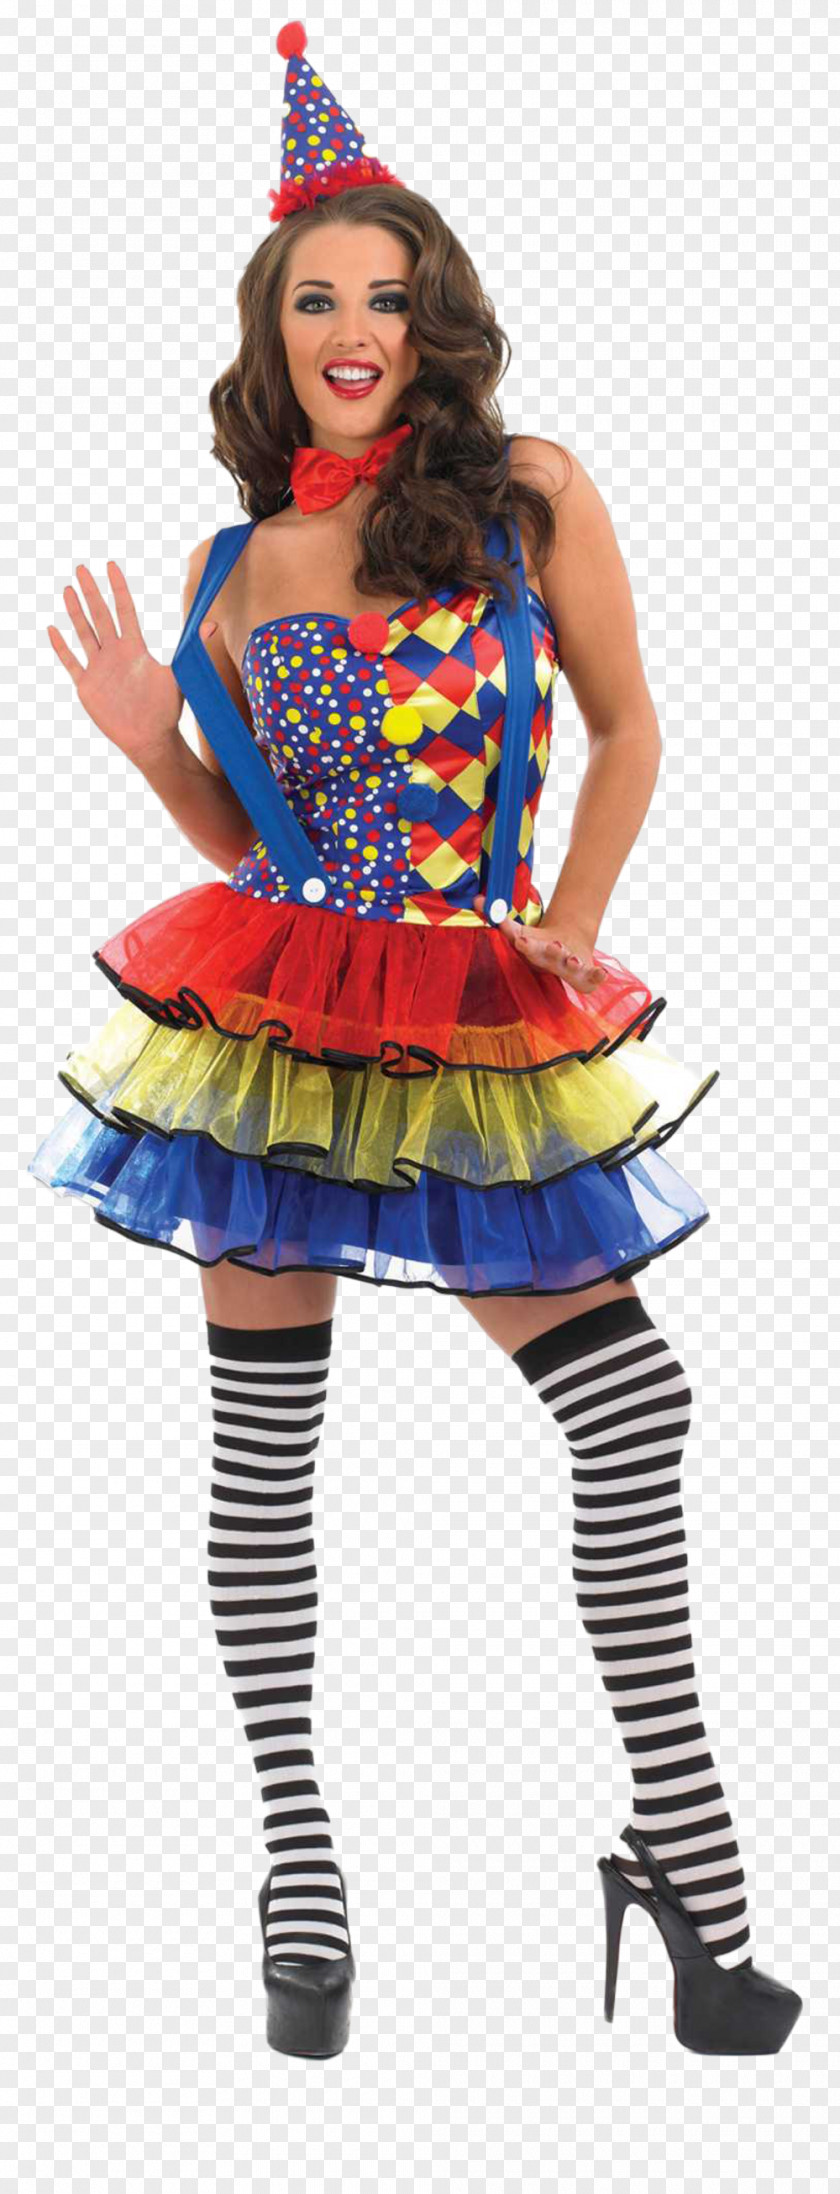 Circus Costume Party Clown Dress Tutu PNG